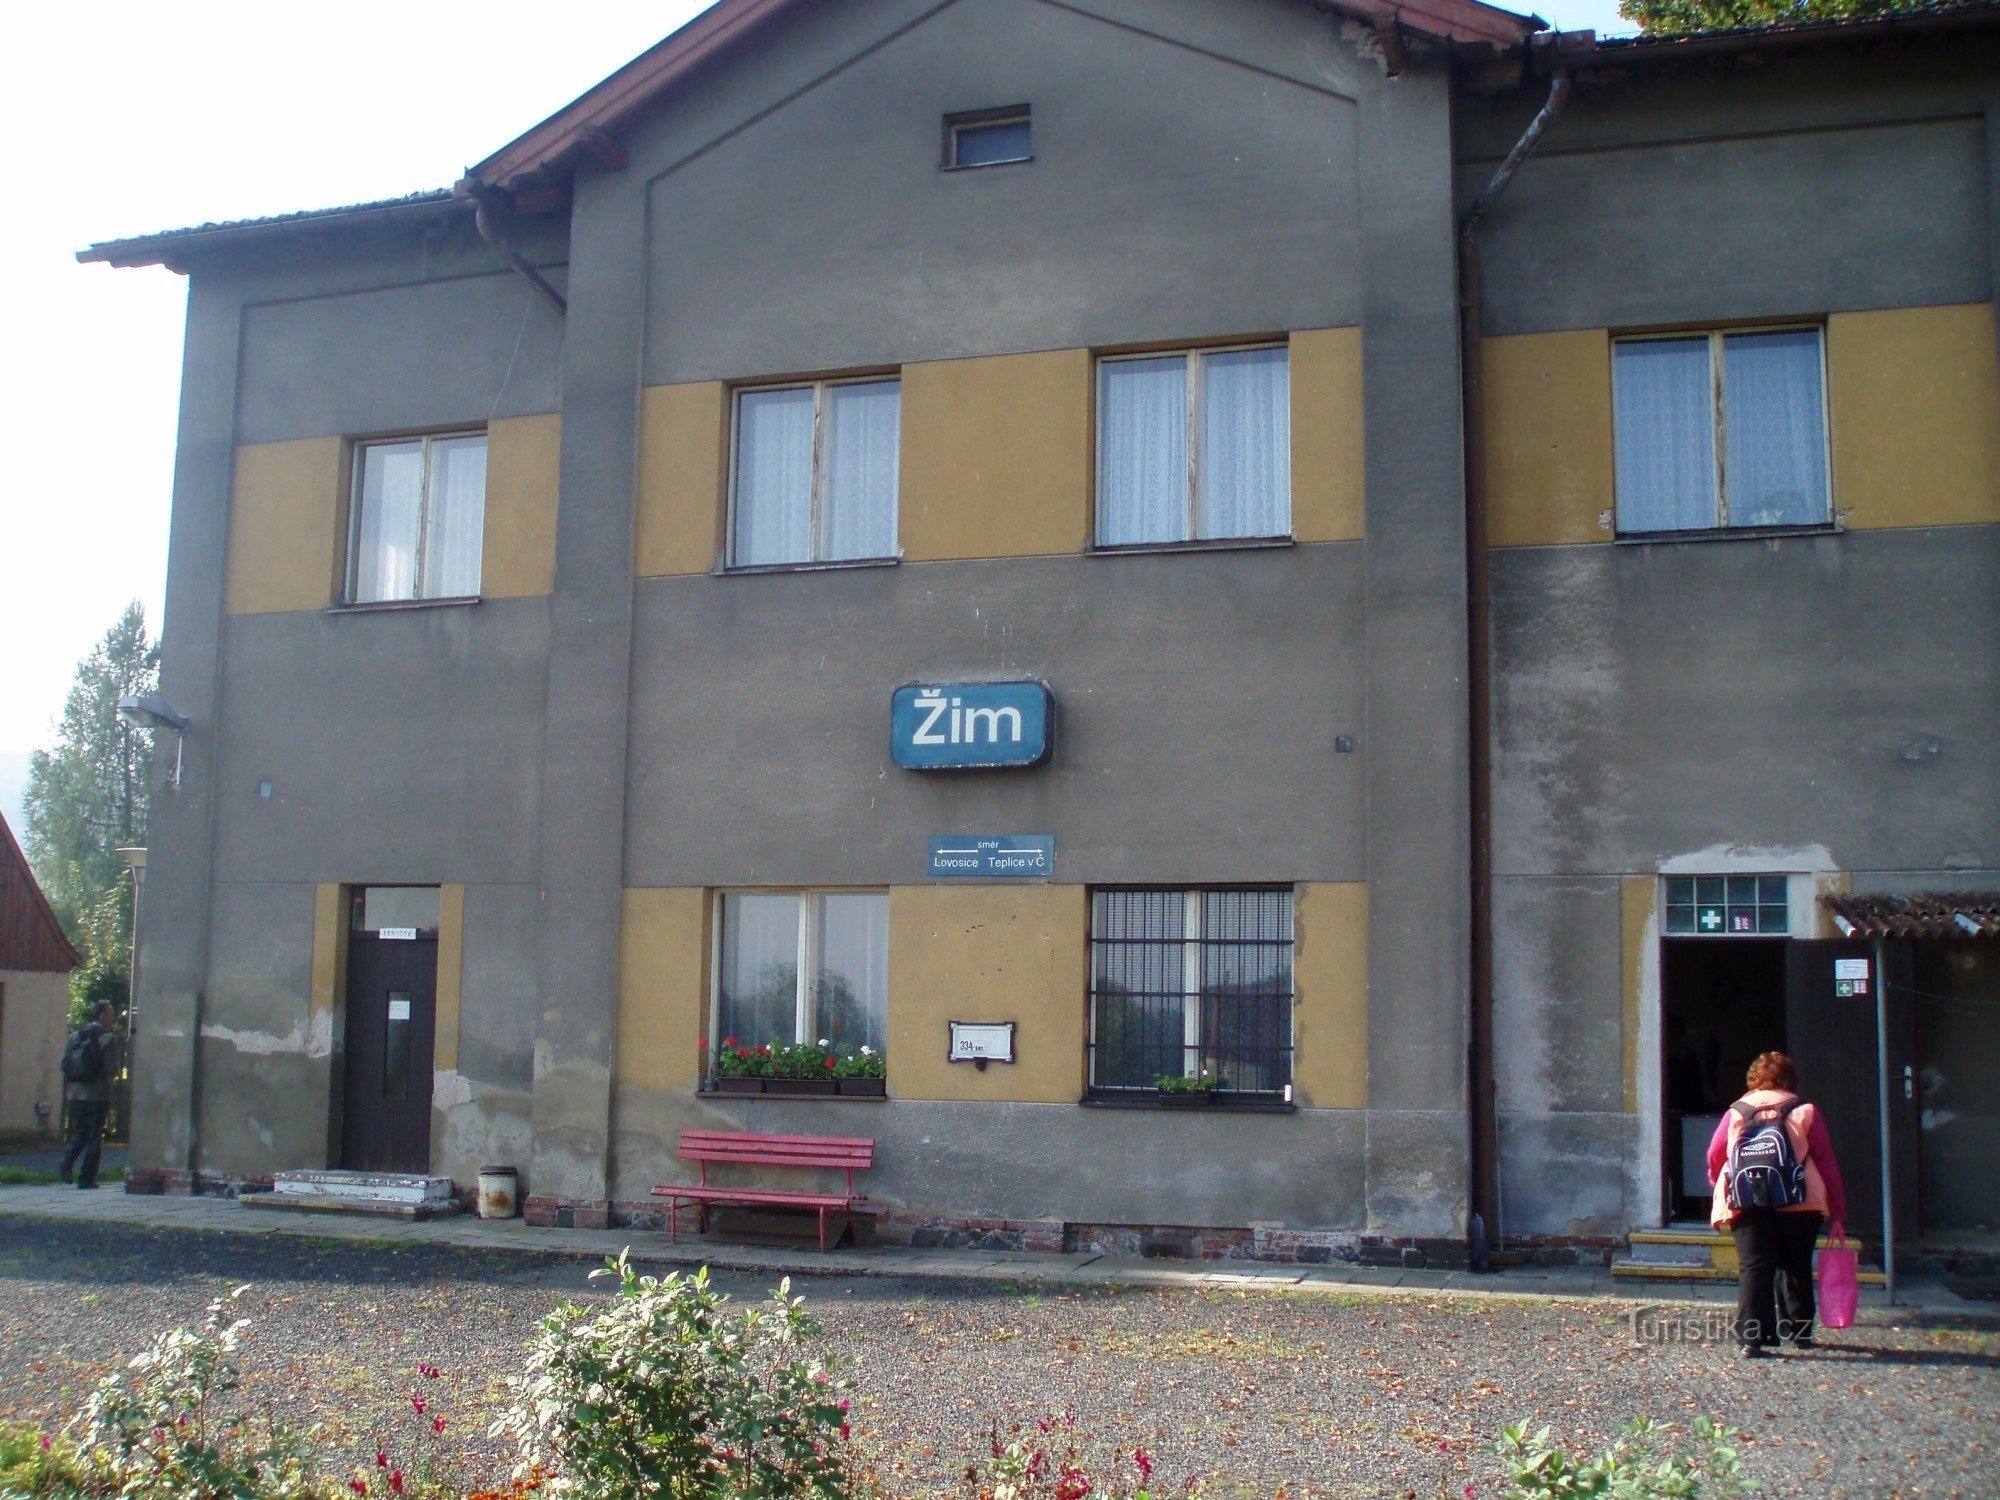 station Žim